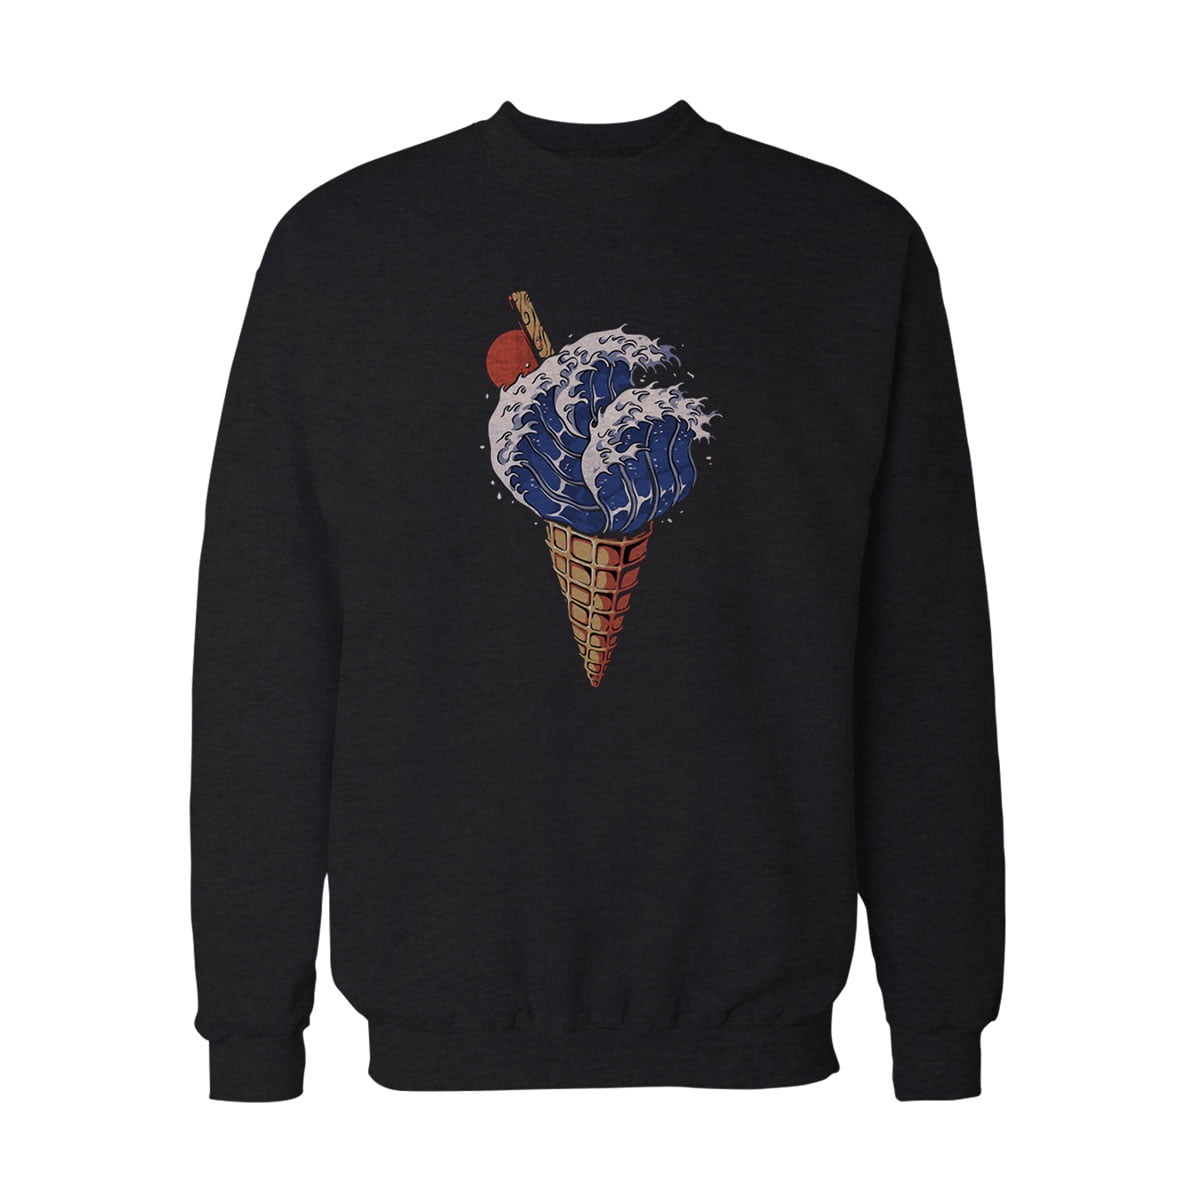 Dondurma ice cream no2 sweatshirt s - japanese i̇ce creams n02 - great wave unisex sweatshirt - figurex